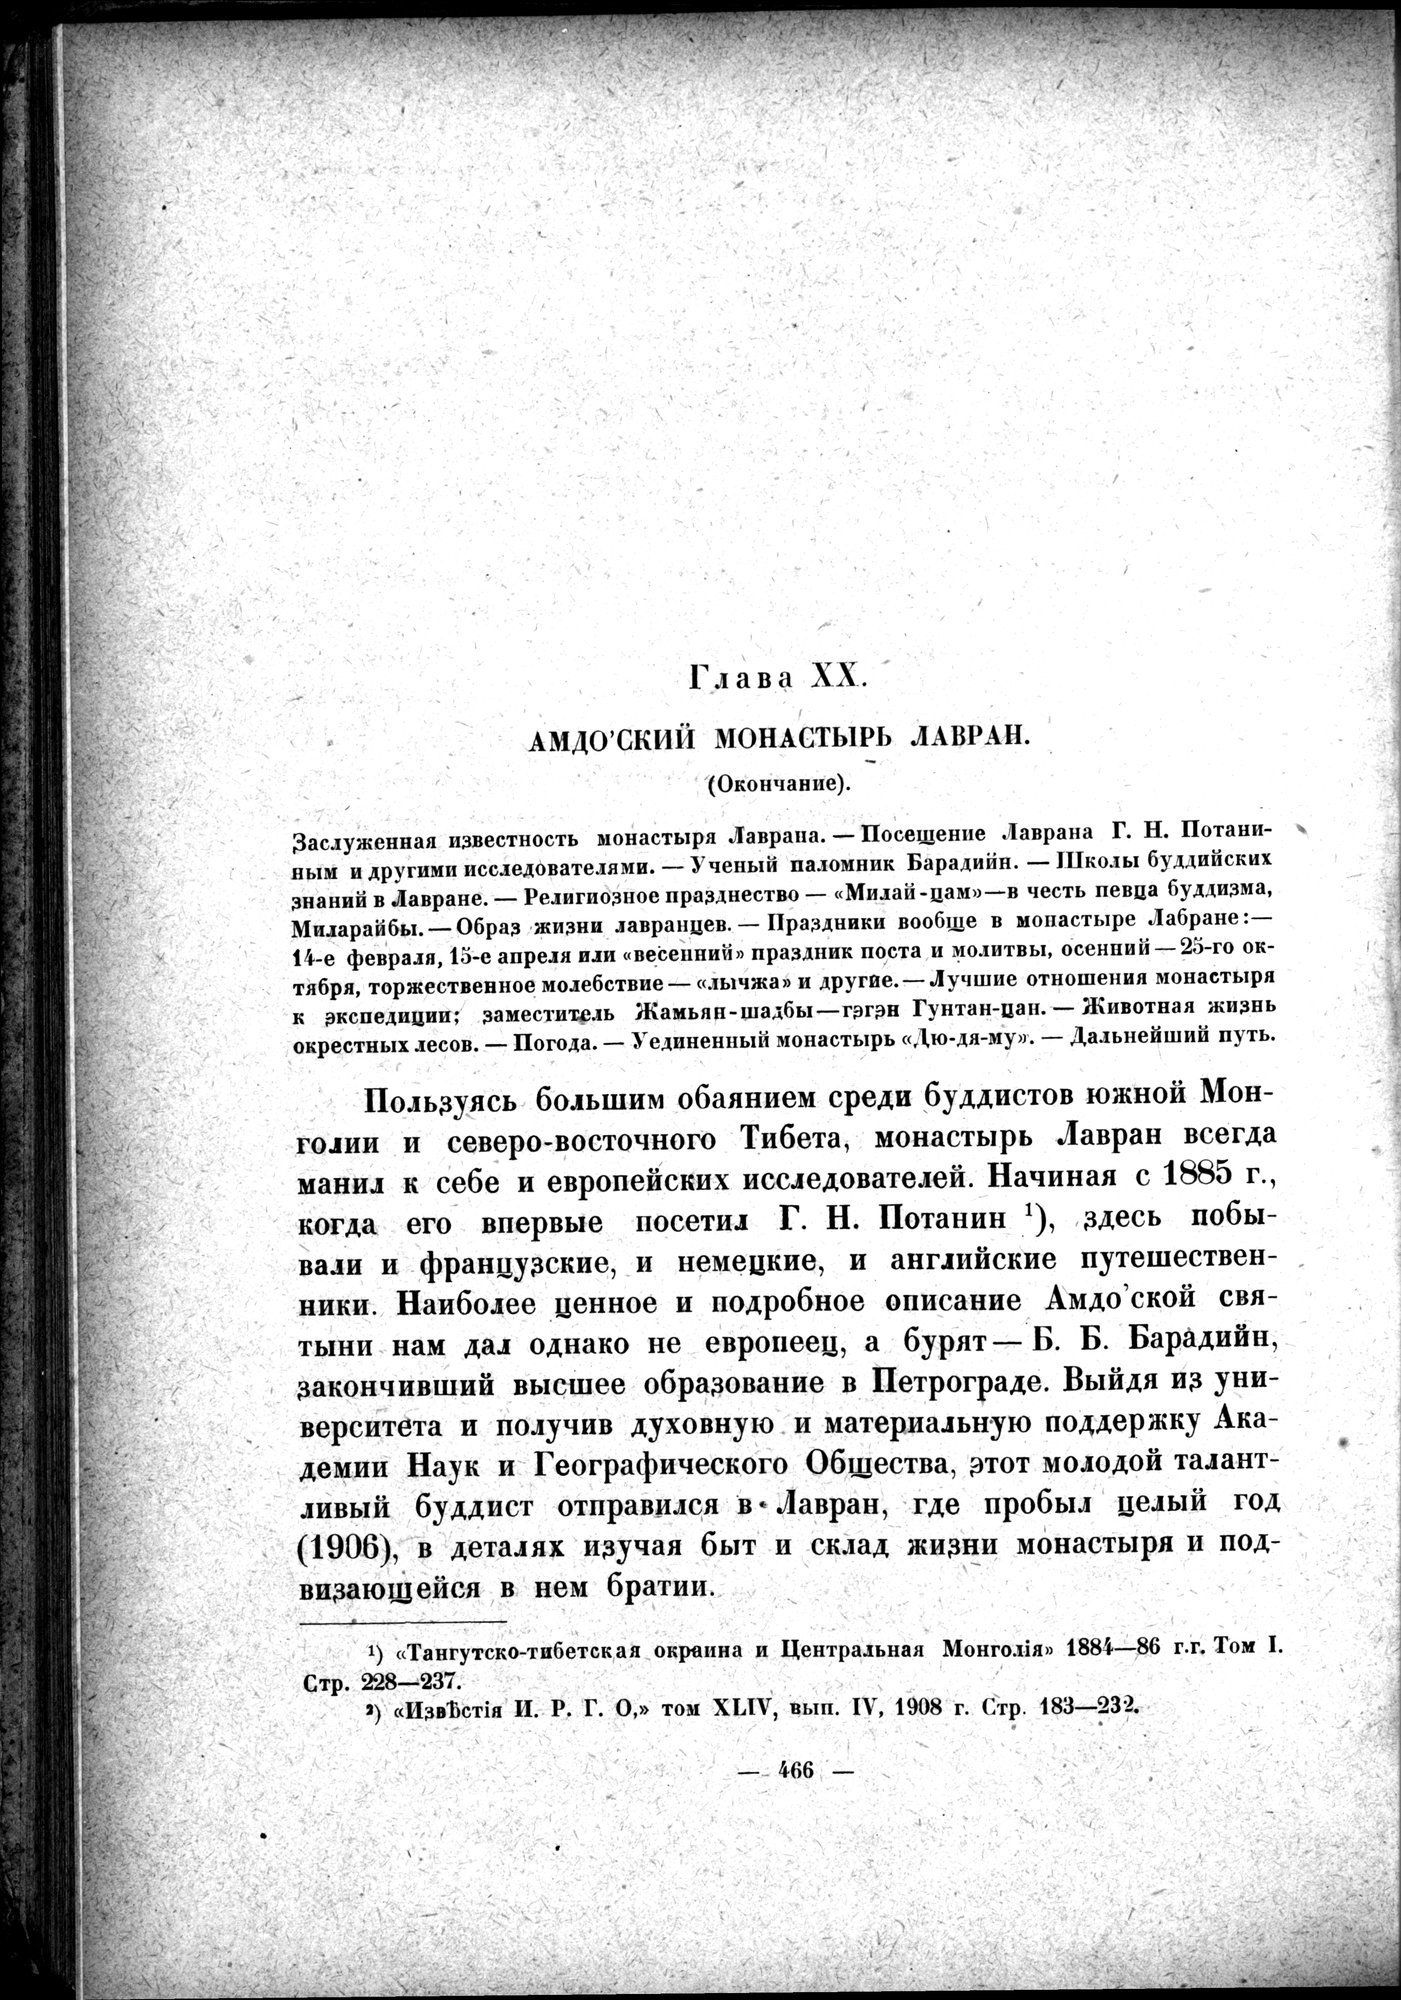 Mongoliya i Amdo i mertby gorod Khara-Khoto : vol.1 / Page 534 (Grayscale High Resolution Image)